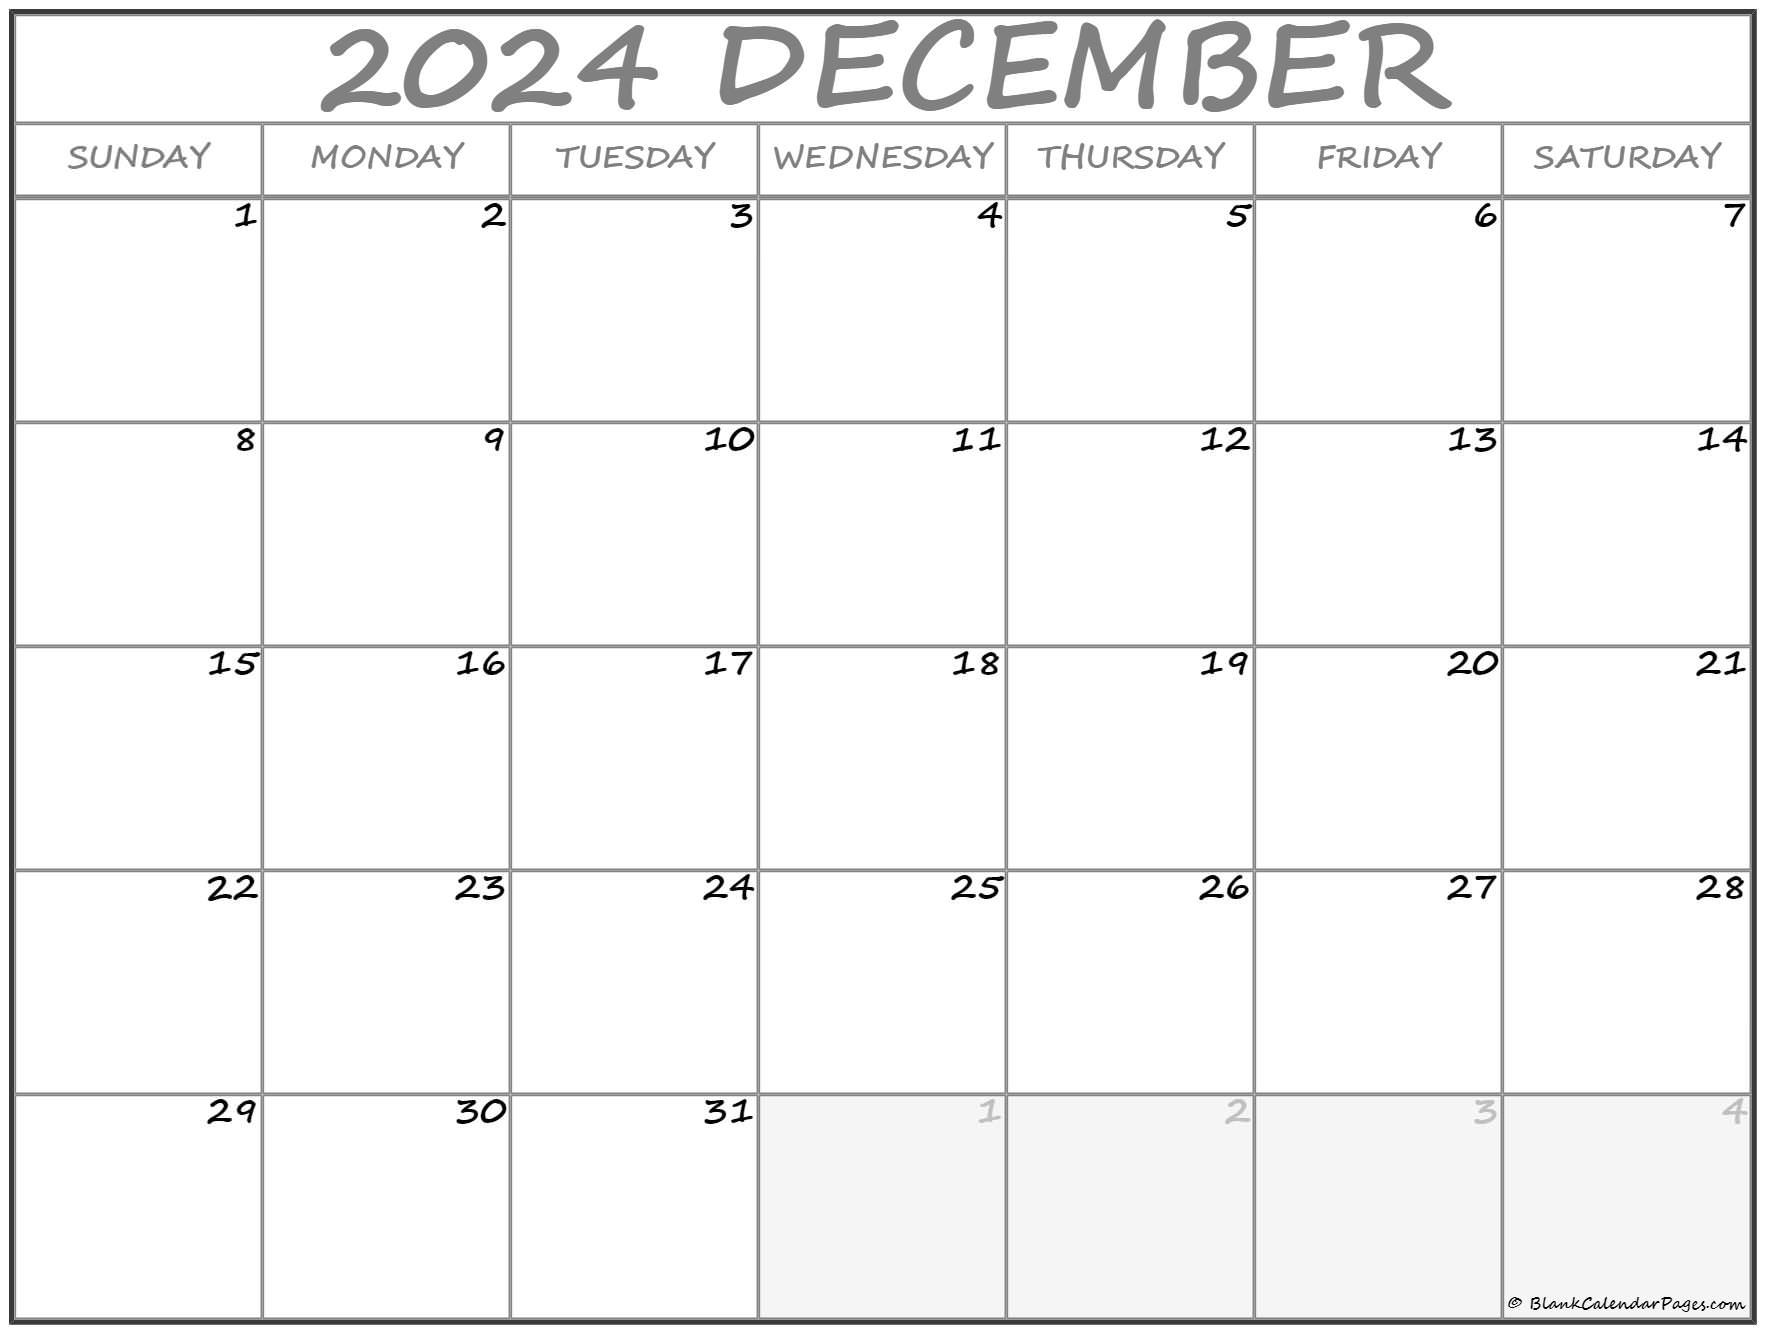 December 2022 calendar | free printable monthly calendars